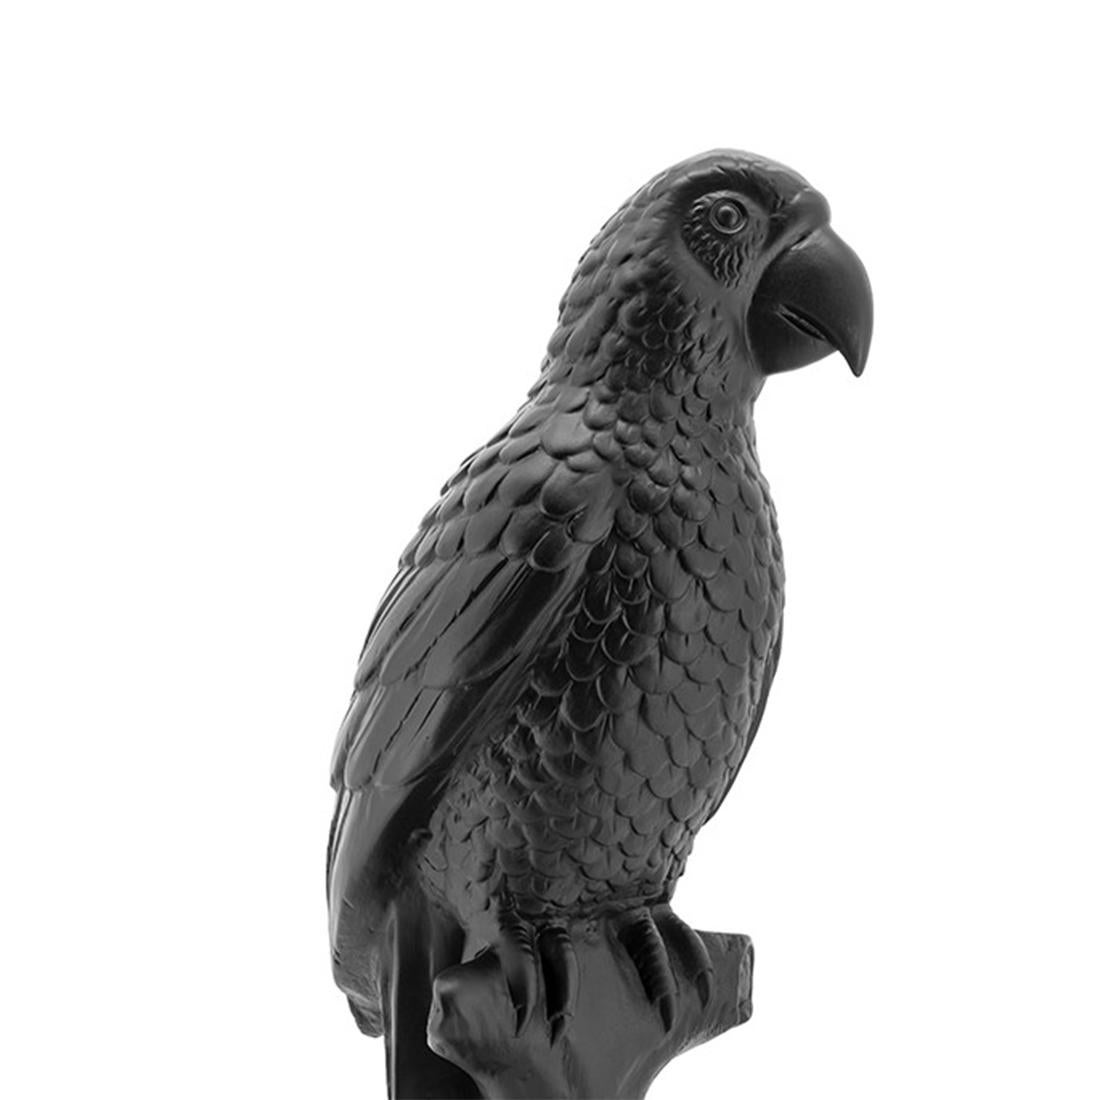 the case of the black parrot cast